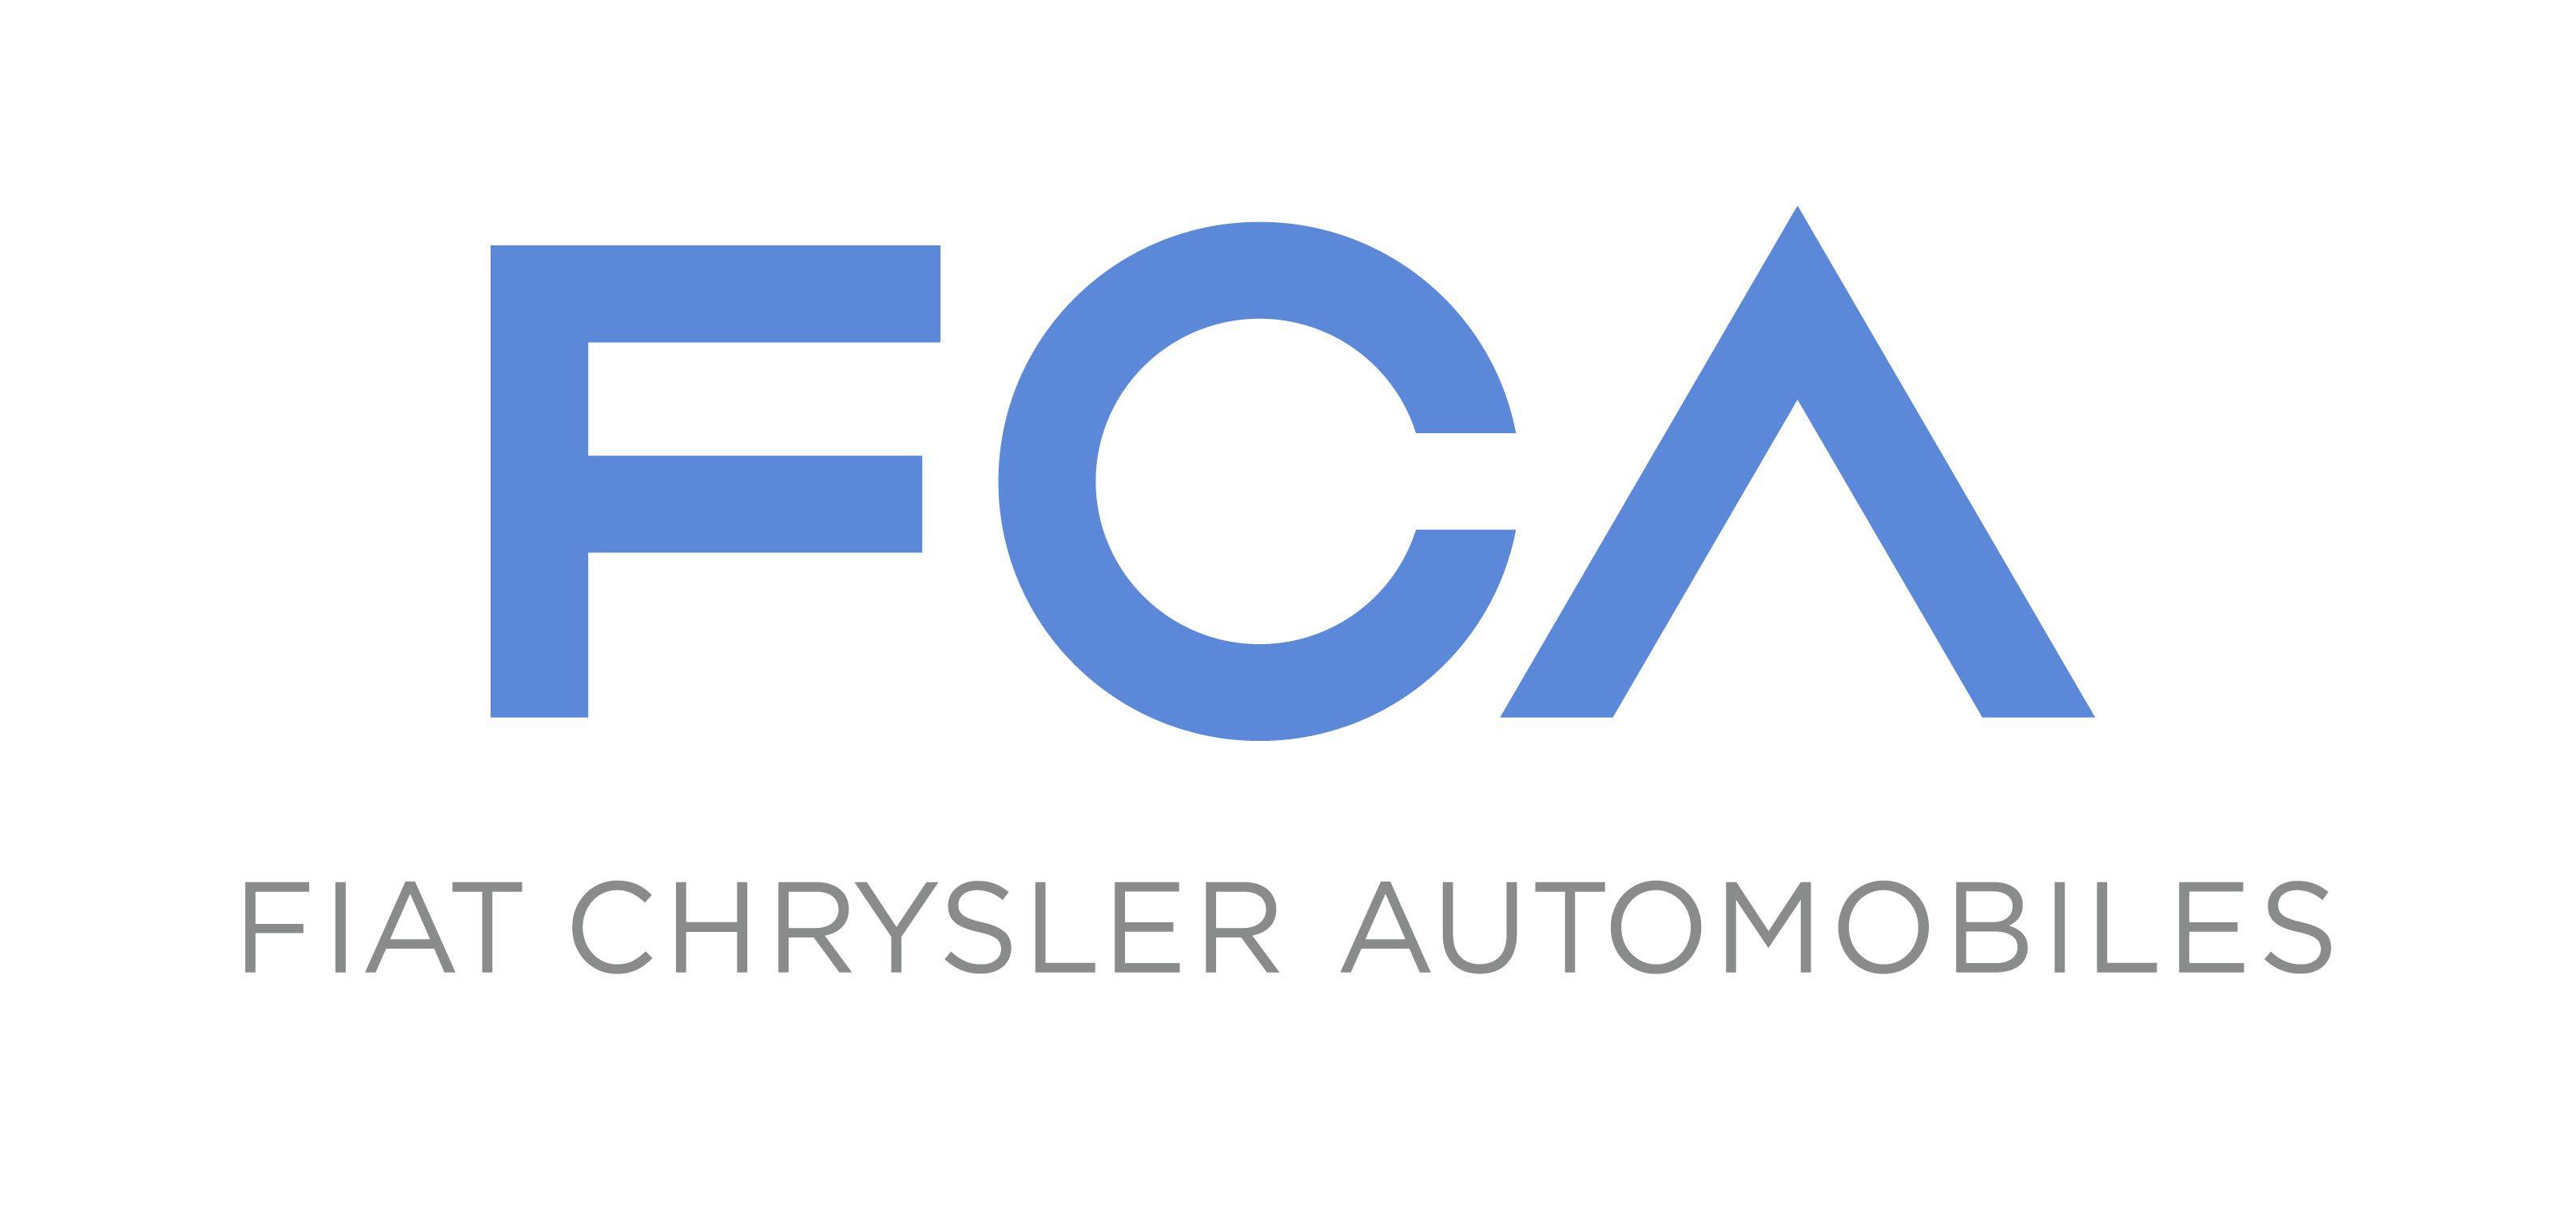 Chrysler FCA Logo - New Fiat Chrysler Automobiles Logo Links the Automakers. Economic